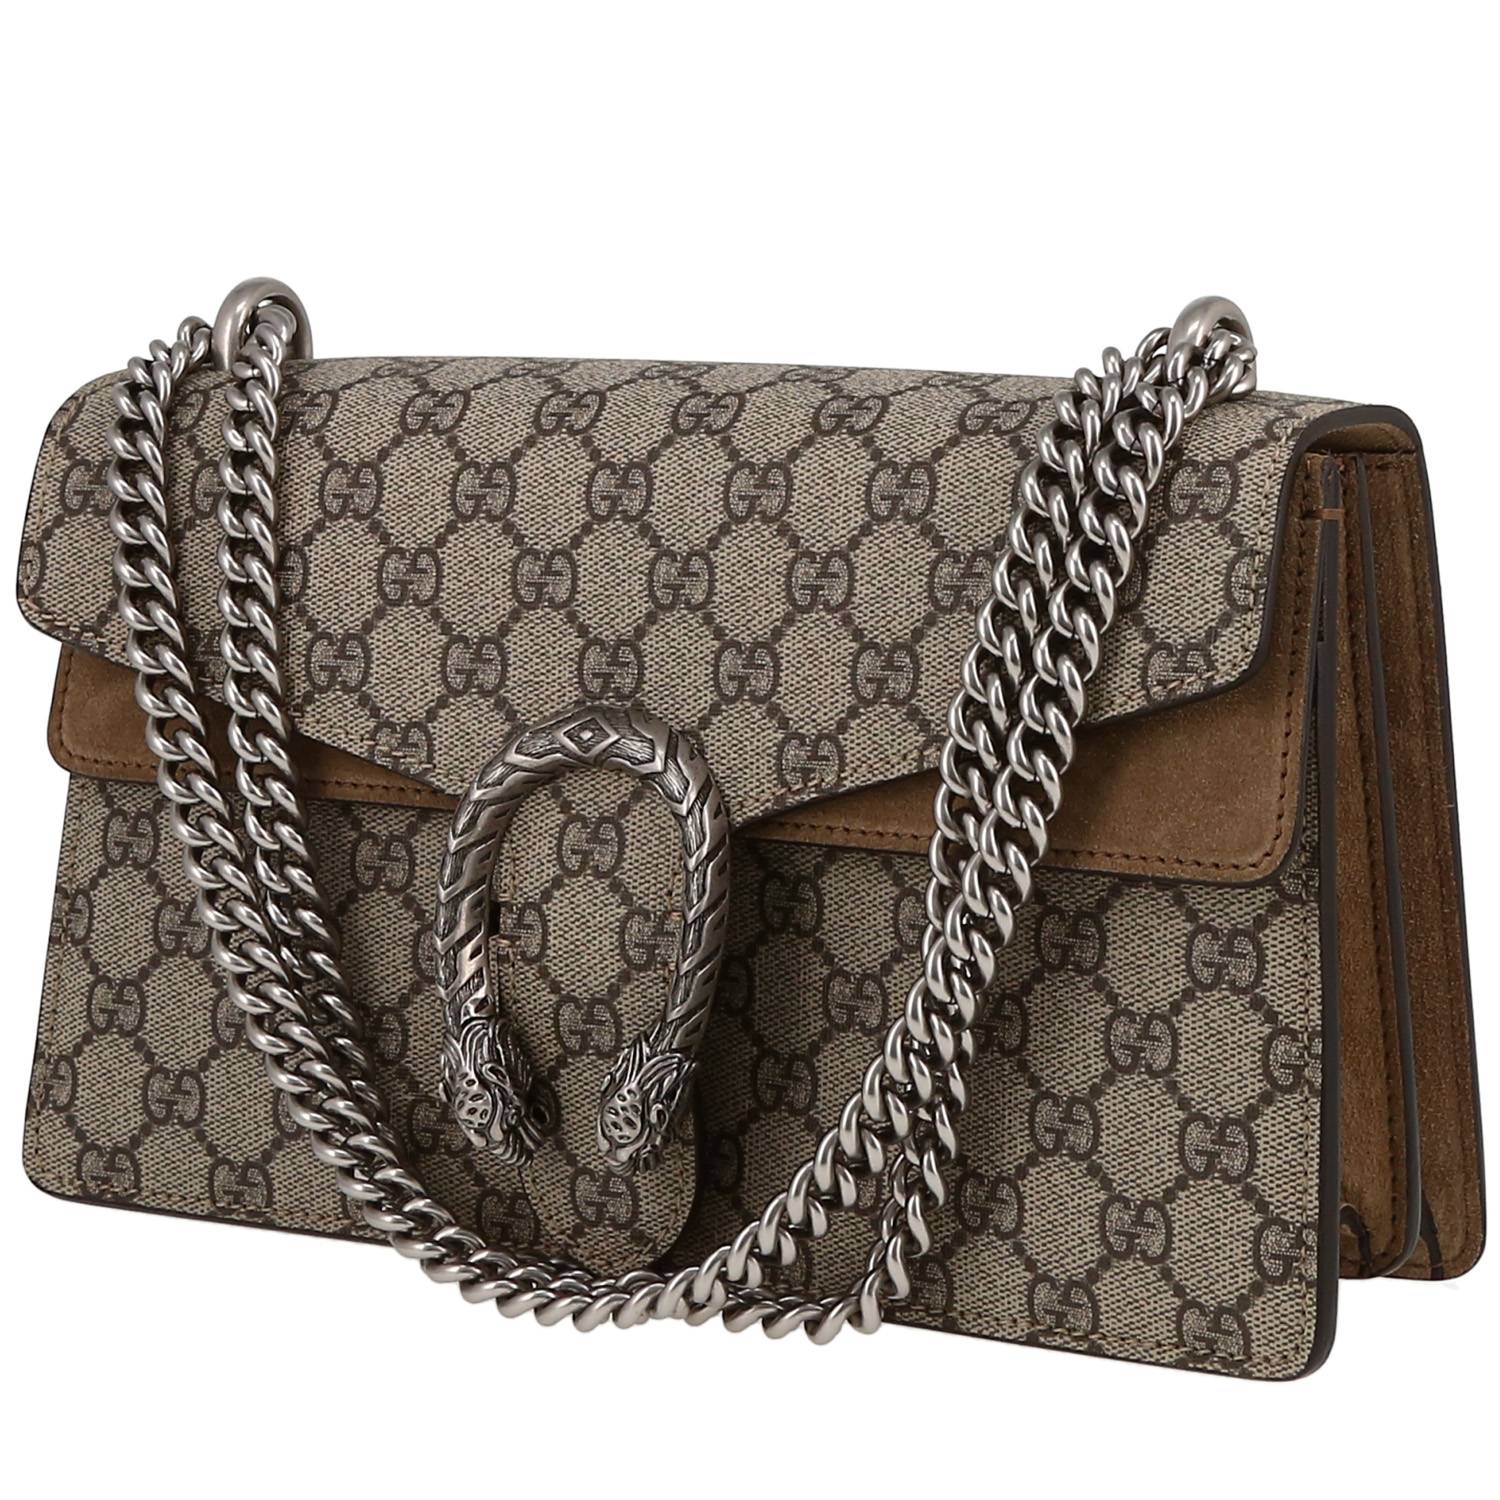 Chanel Brown Suede Mademoiselle Lock Reissue Flap Bag